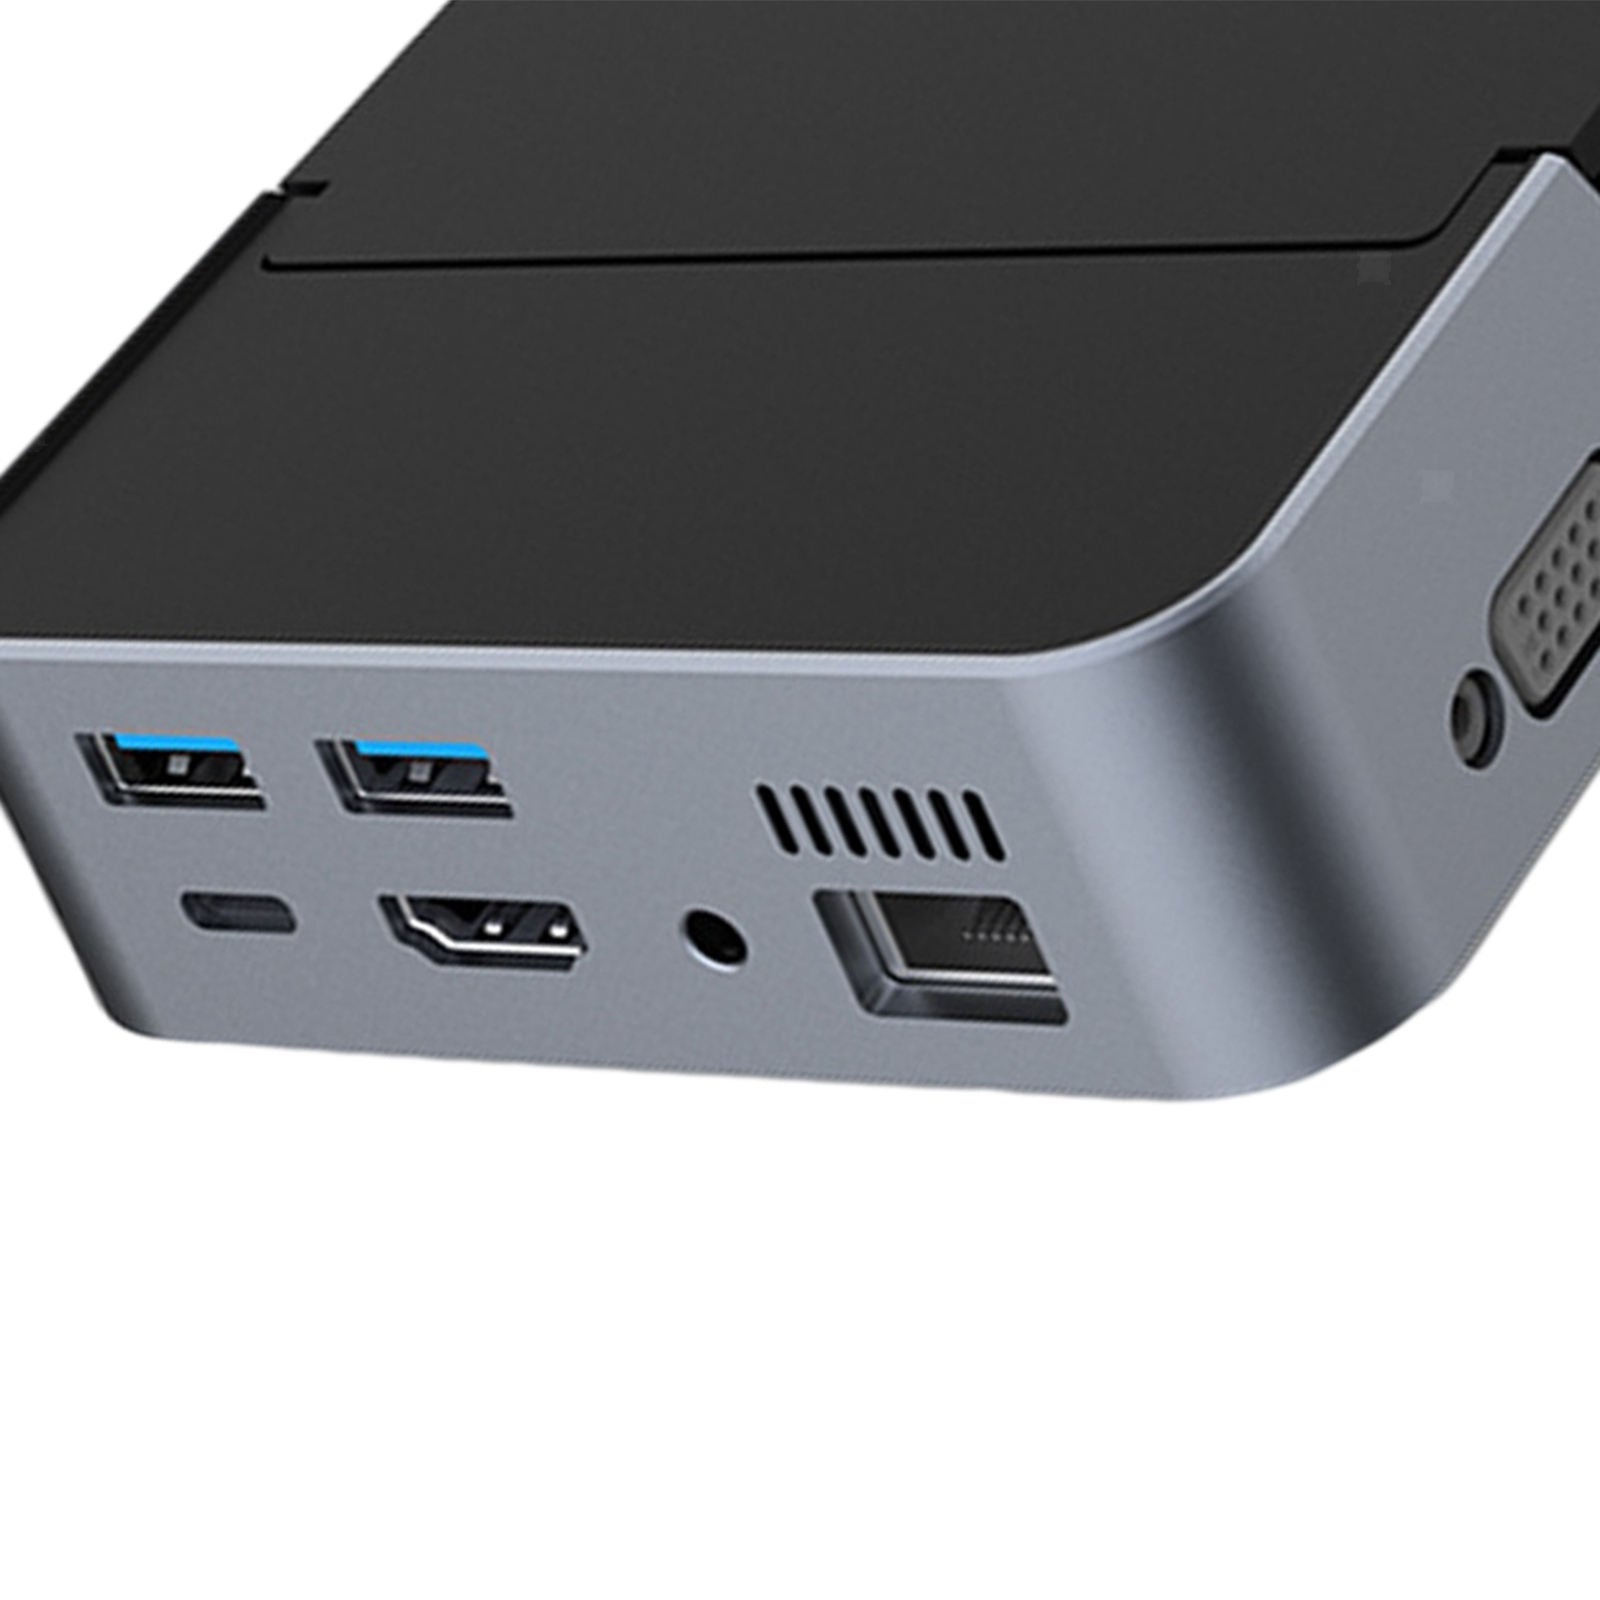 USB Type C to HDMI VGA Adapter 9 in 1 SD/TF Card Reader Hub 2 USB Ports